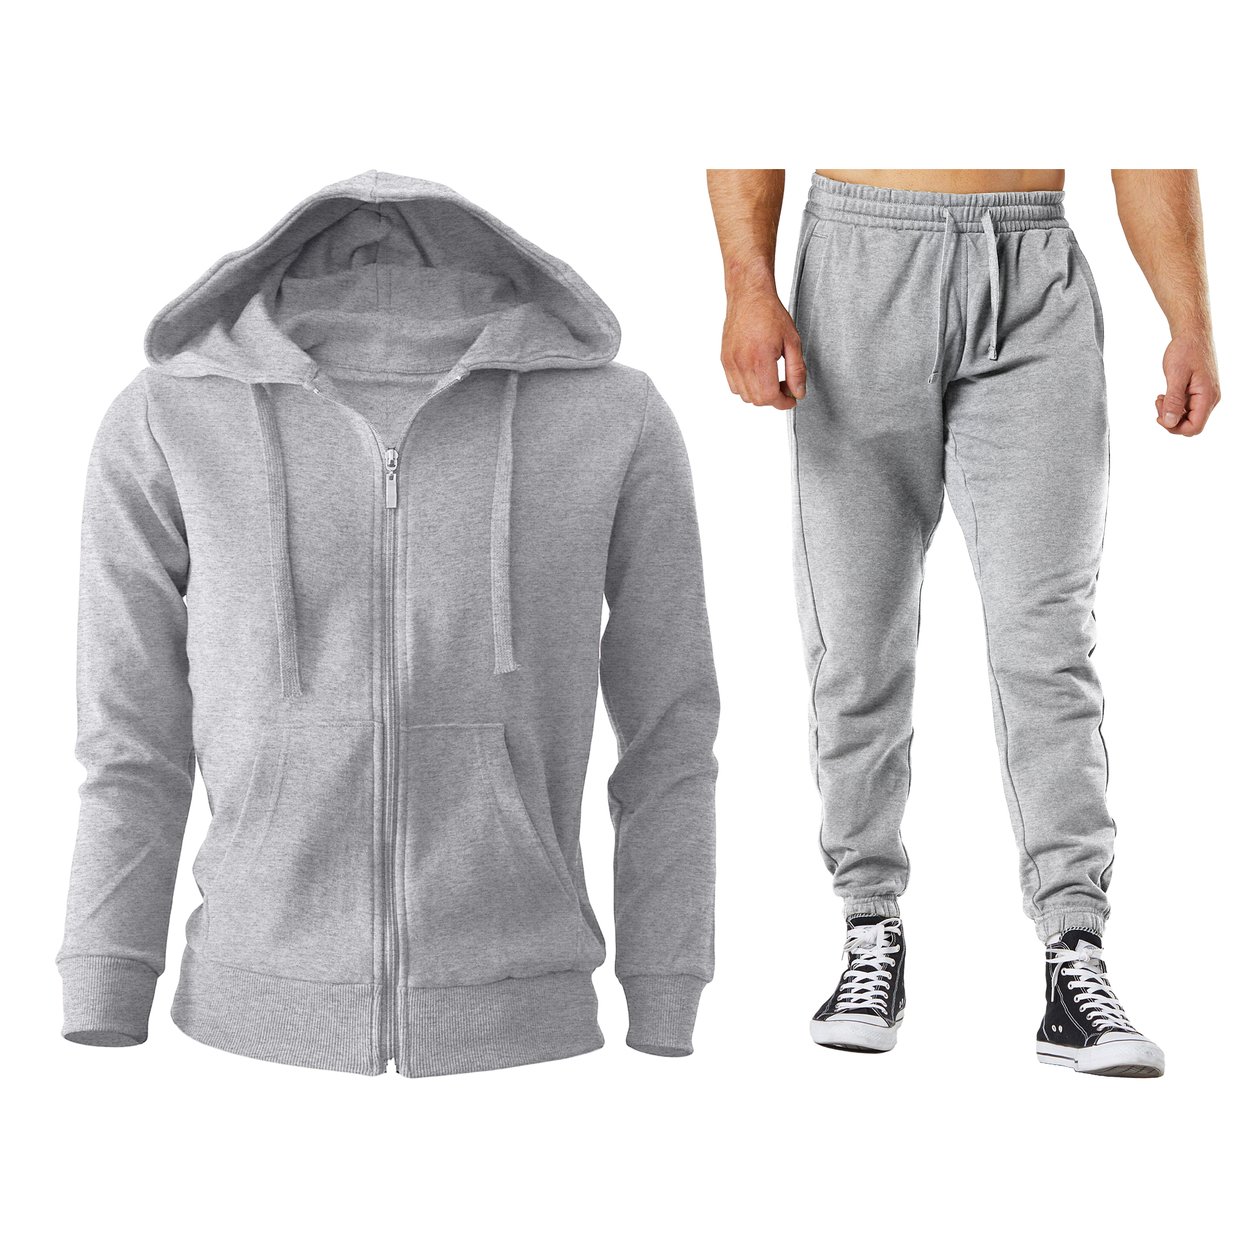 2/4-Piece: Men's Winter Warm Cozy Athletic Multi-Pockets BIG & TALL Sweatsuit Set - Grey, 1, Large